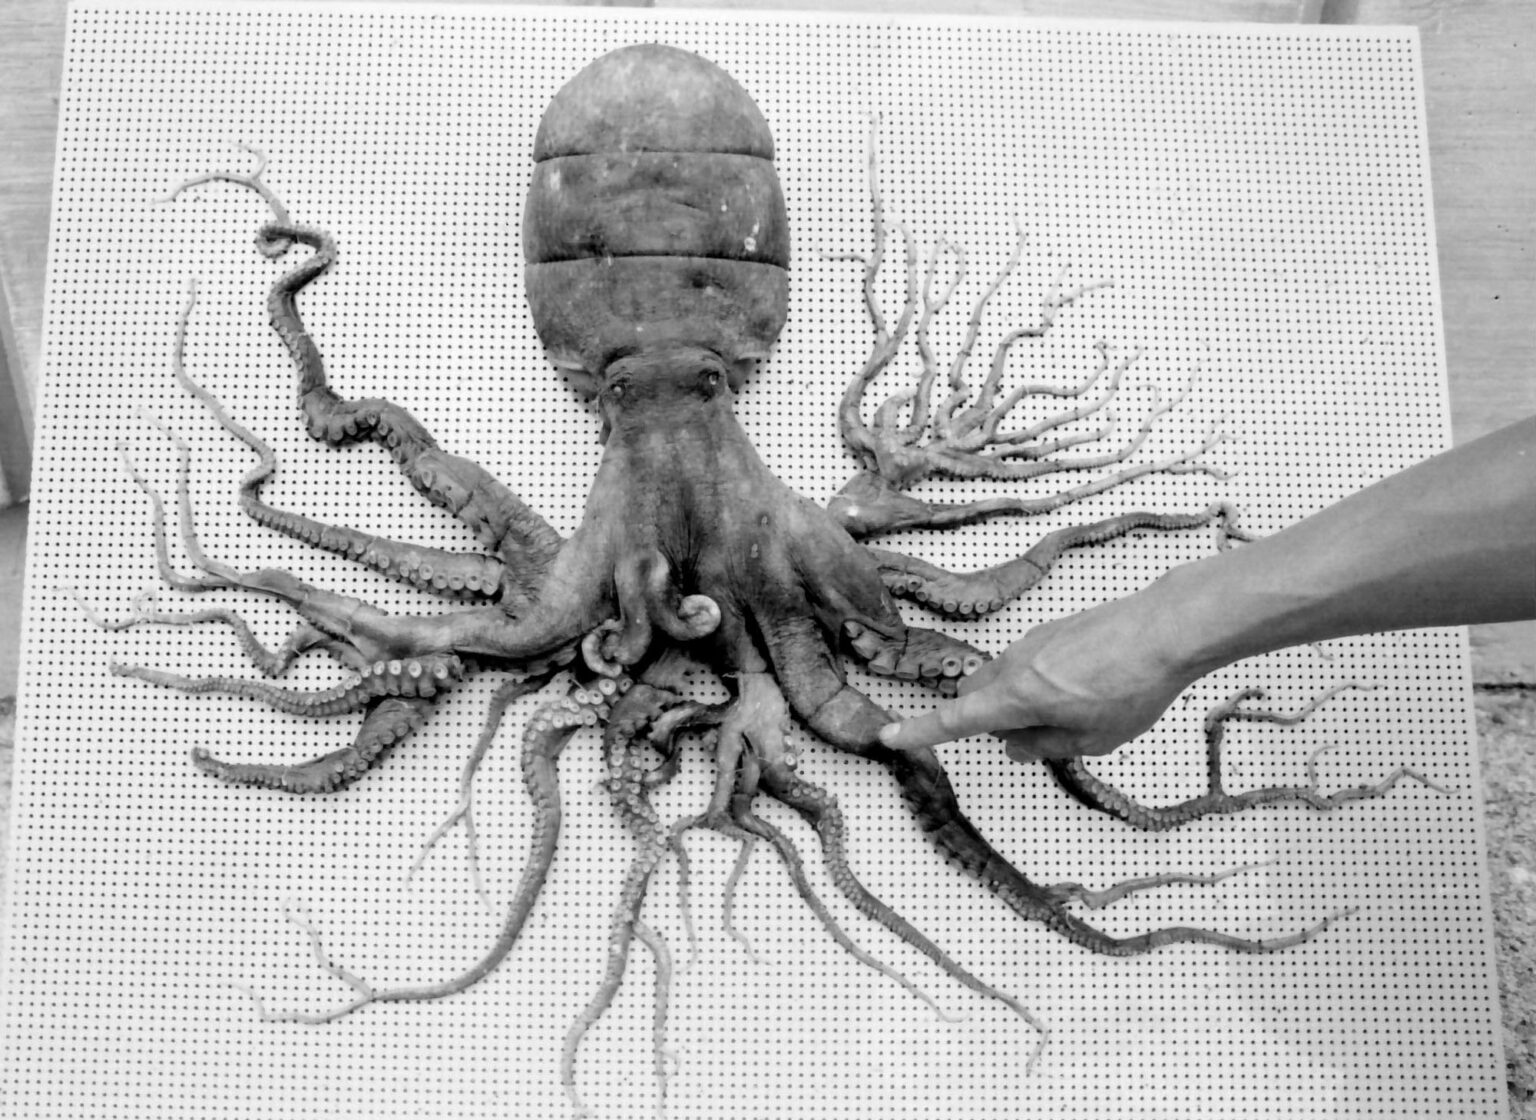 can octopus regenerate tentacles